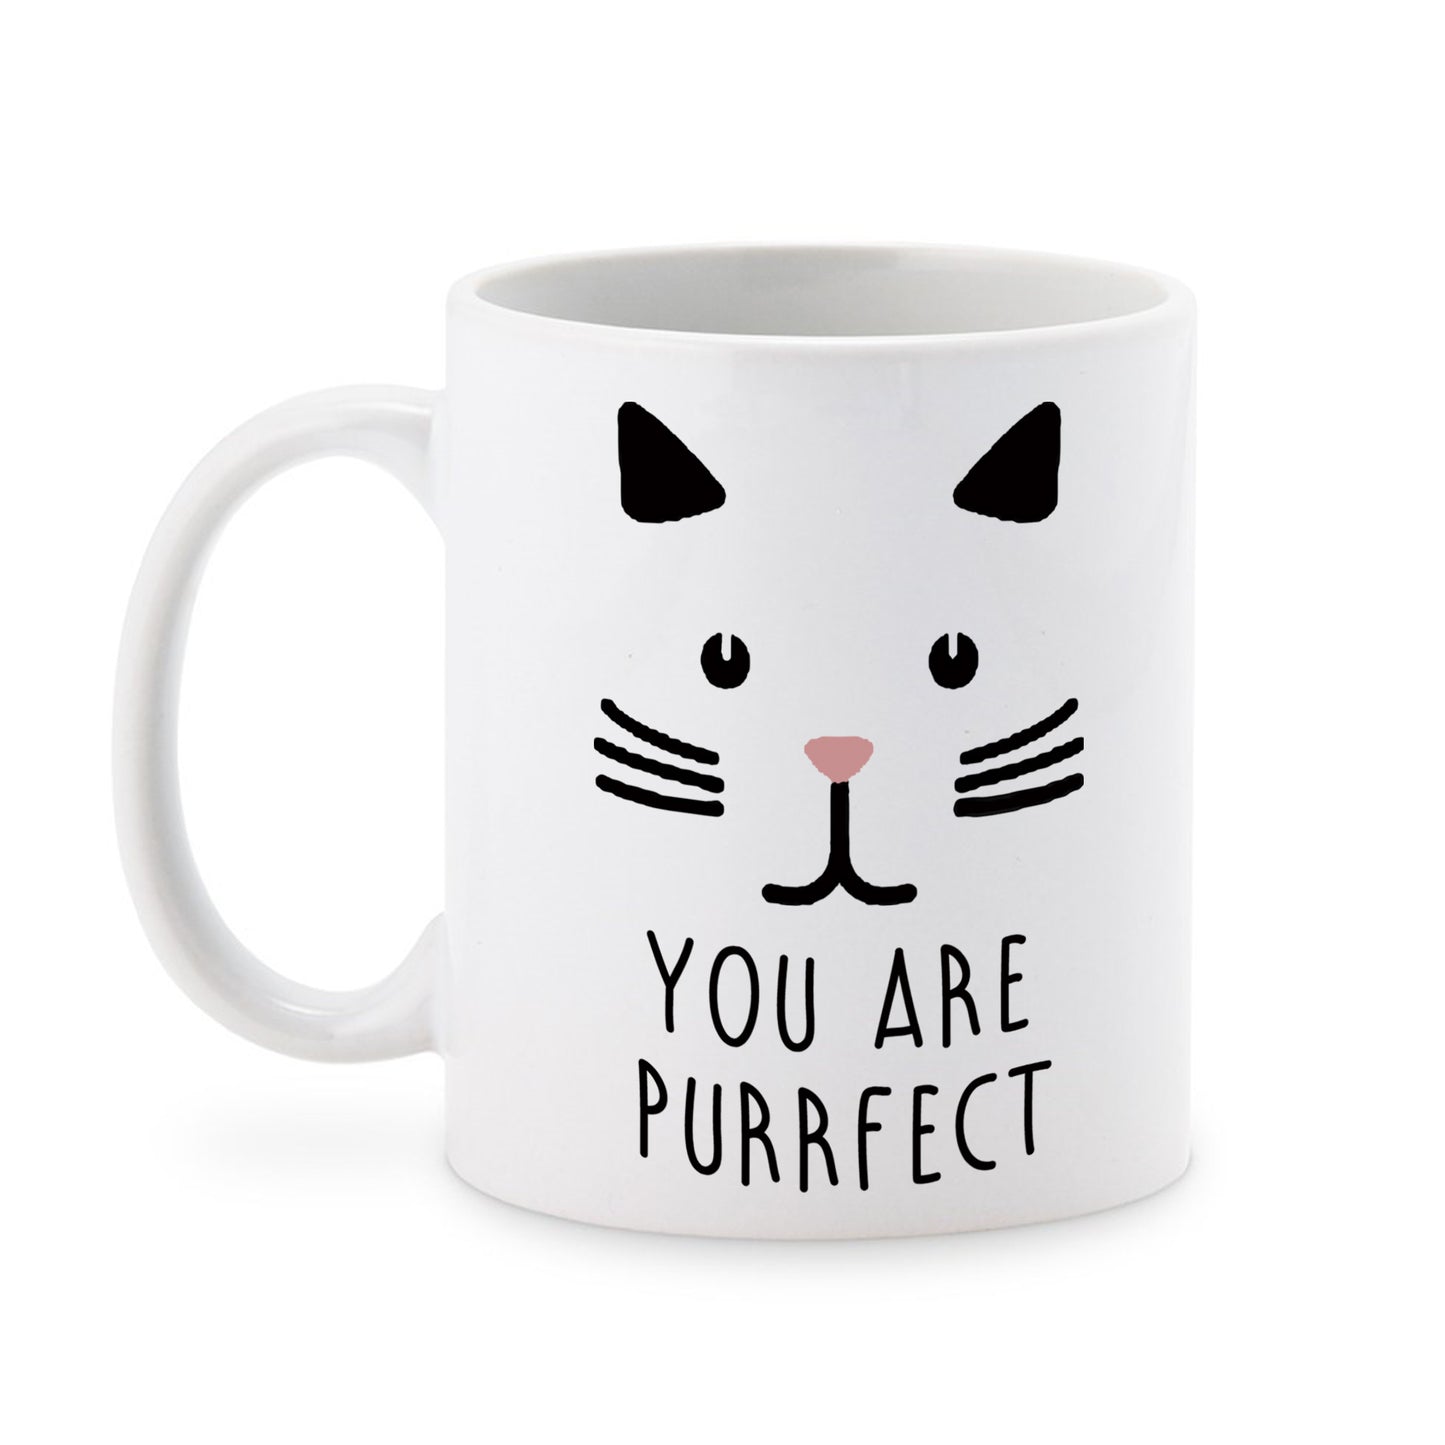 You Are Purrfect Mug